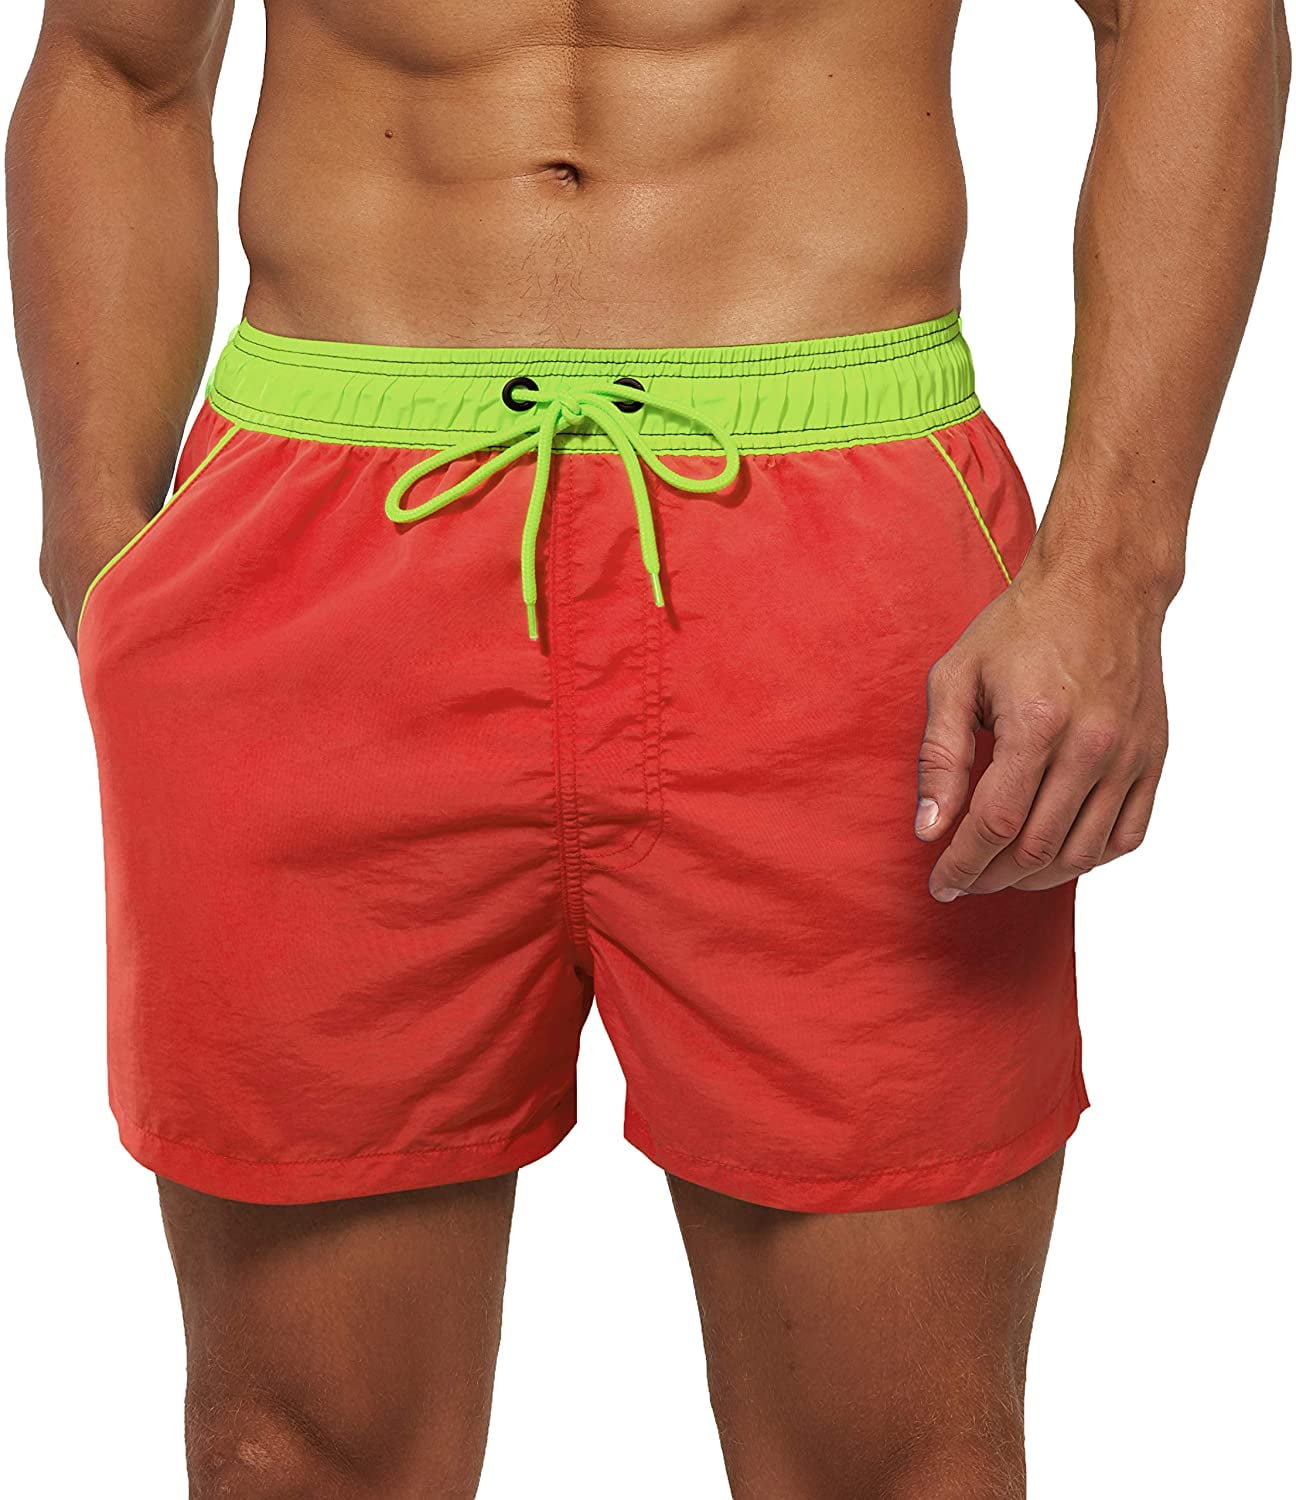 SILKWORLD Men's Quick Dry Swim Trunks Solid Swimsuit Sports Shorts with Back Zipper Pockets 